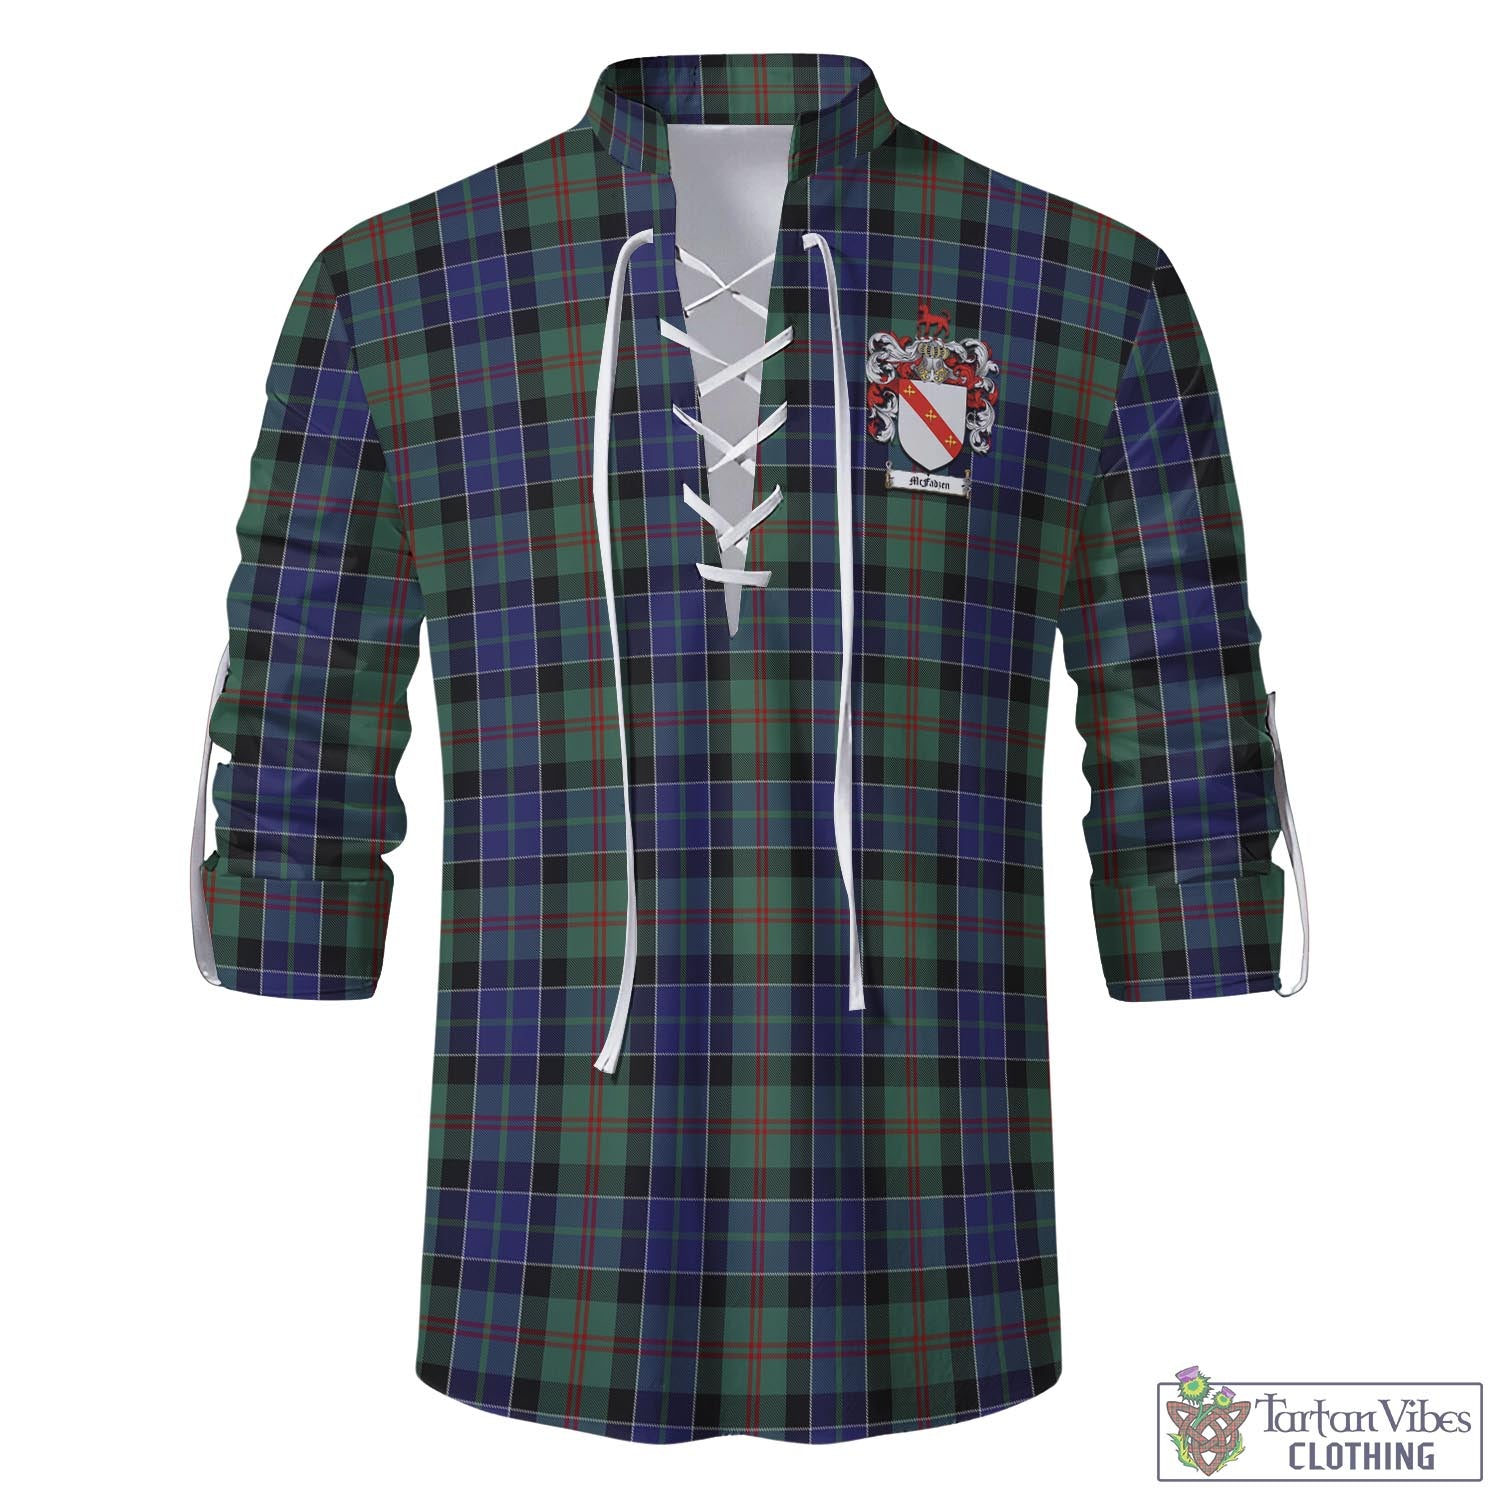 Tartan Vibes Clothing McFadzen 02 Tartan Men's Scottish Traditional Jacobite Ghillie Kilt Shirt with Family Crest